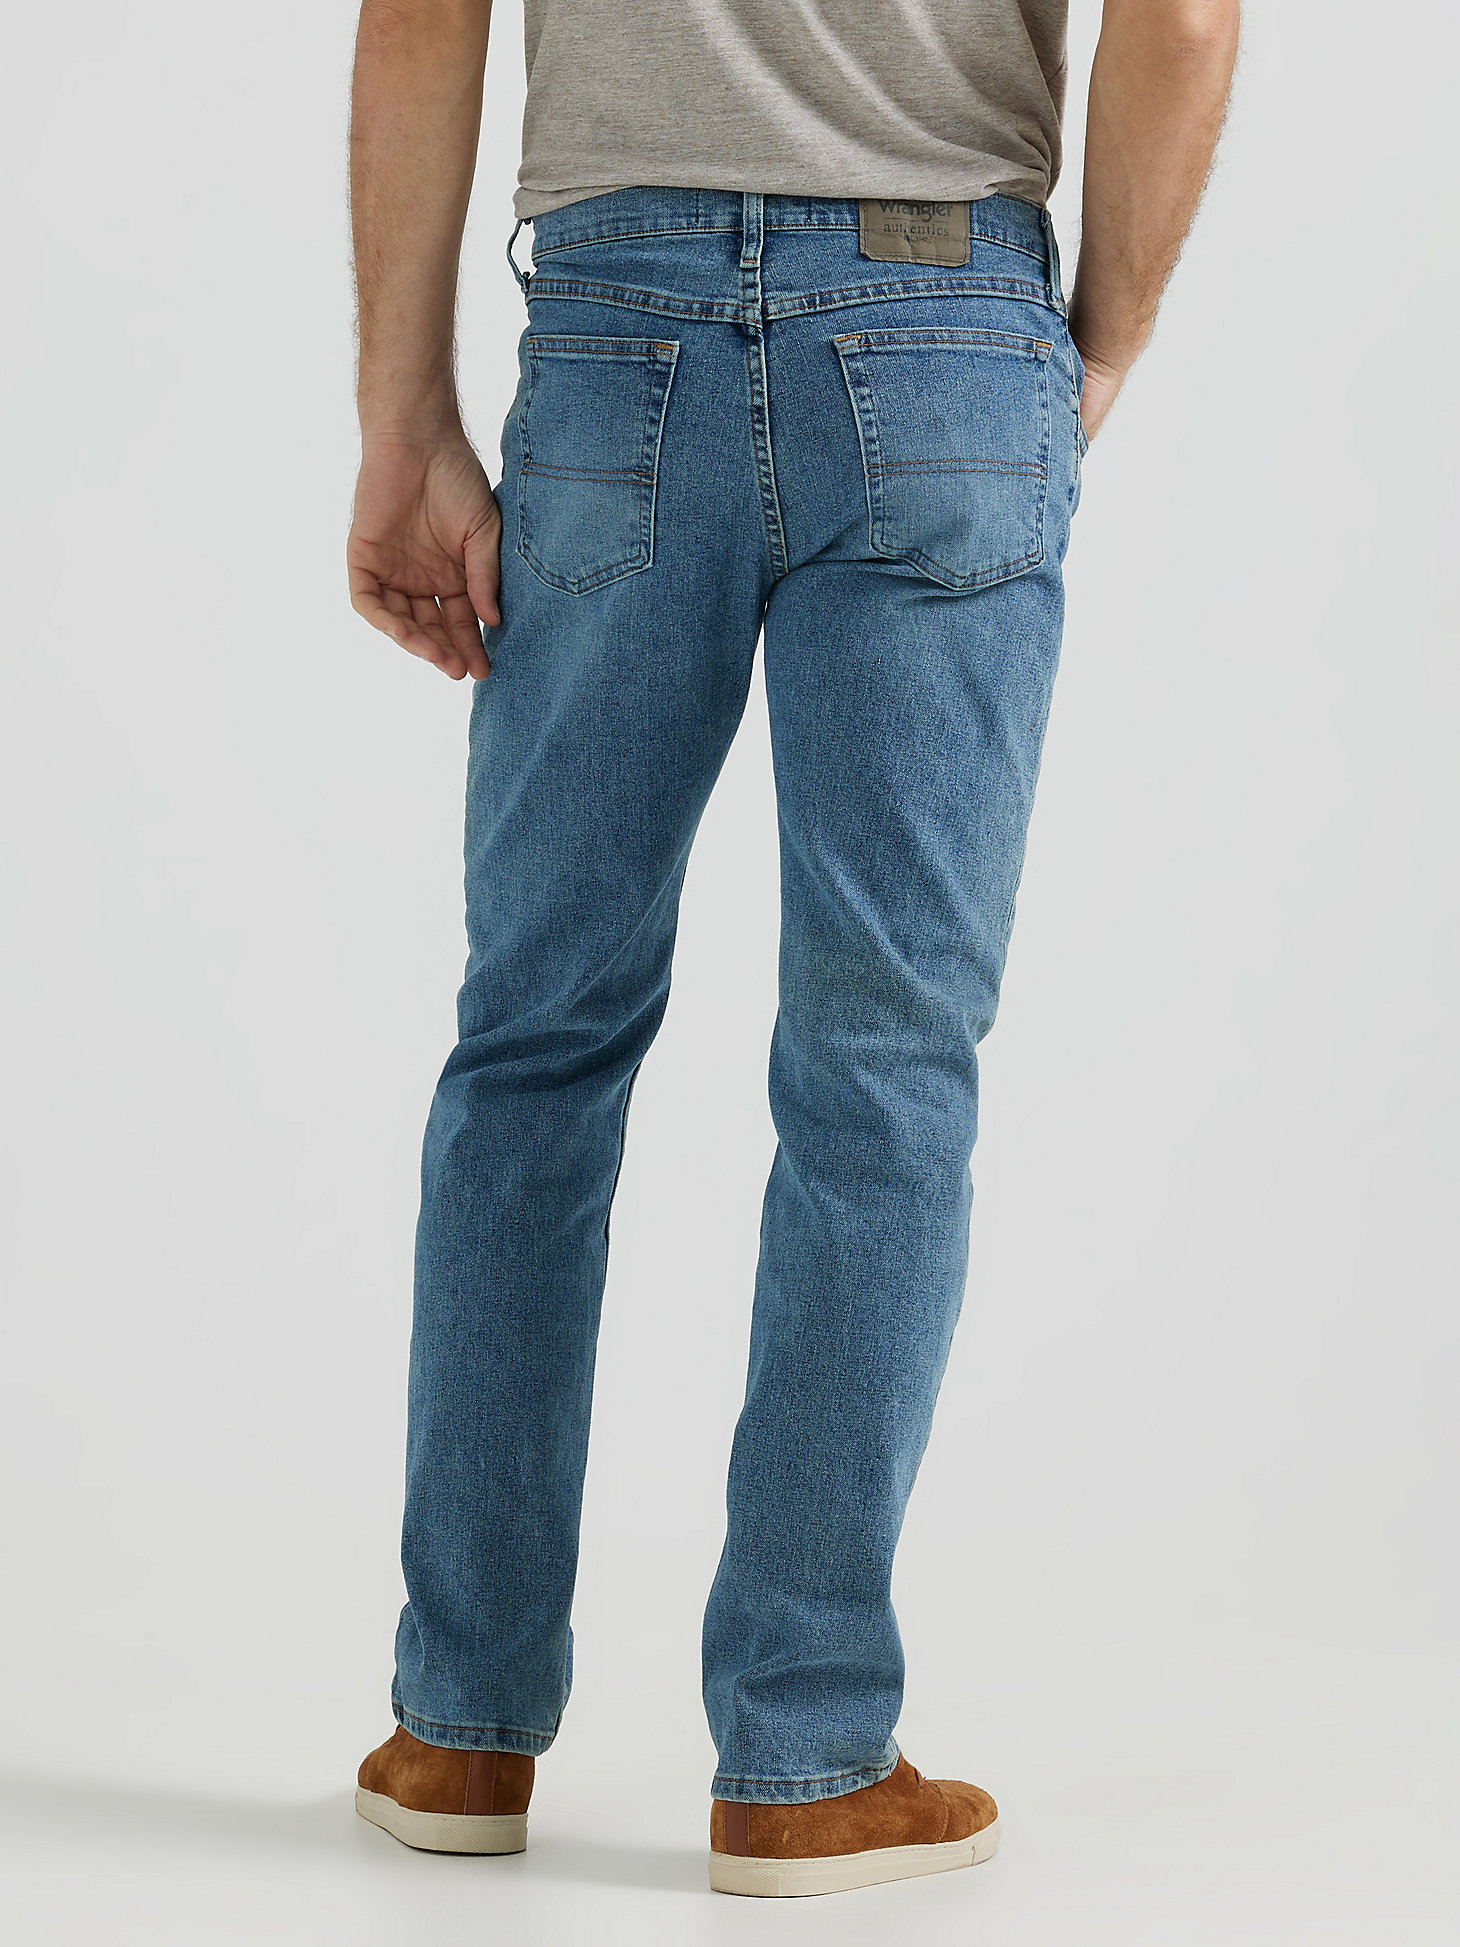 Men's Wrangler Authentics® Regular Fit Flex Jean in Vintage Blue alternative view 1